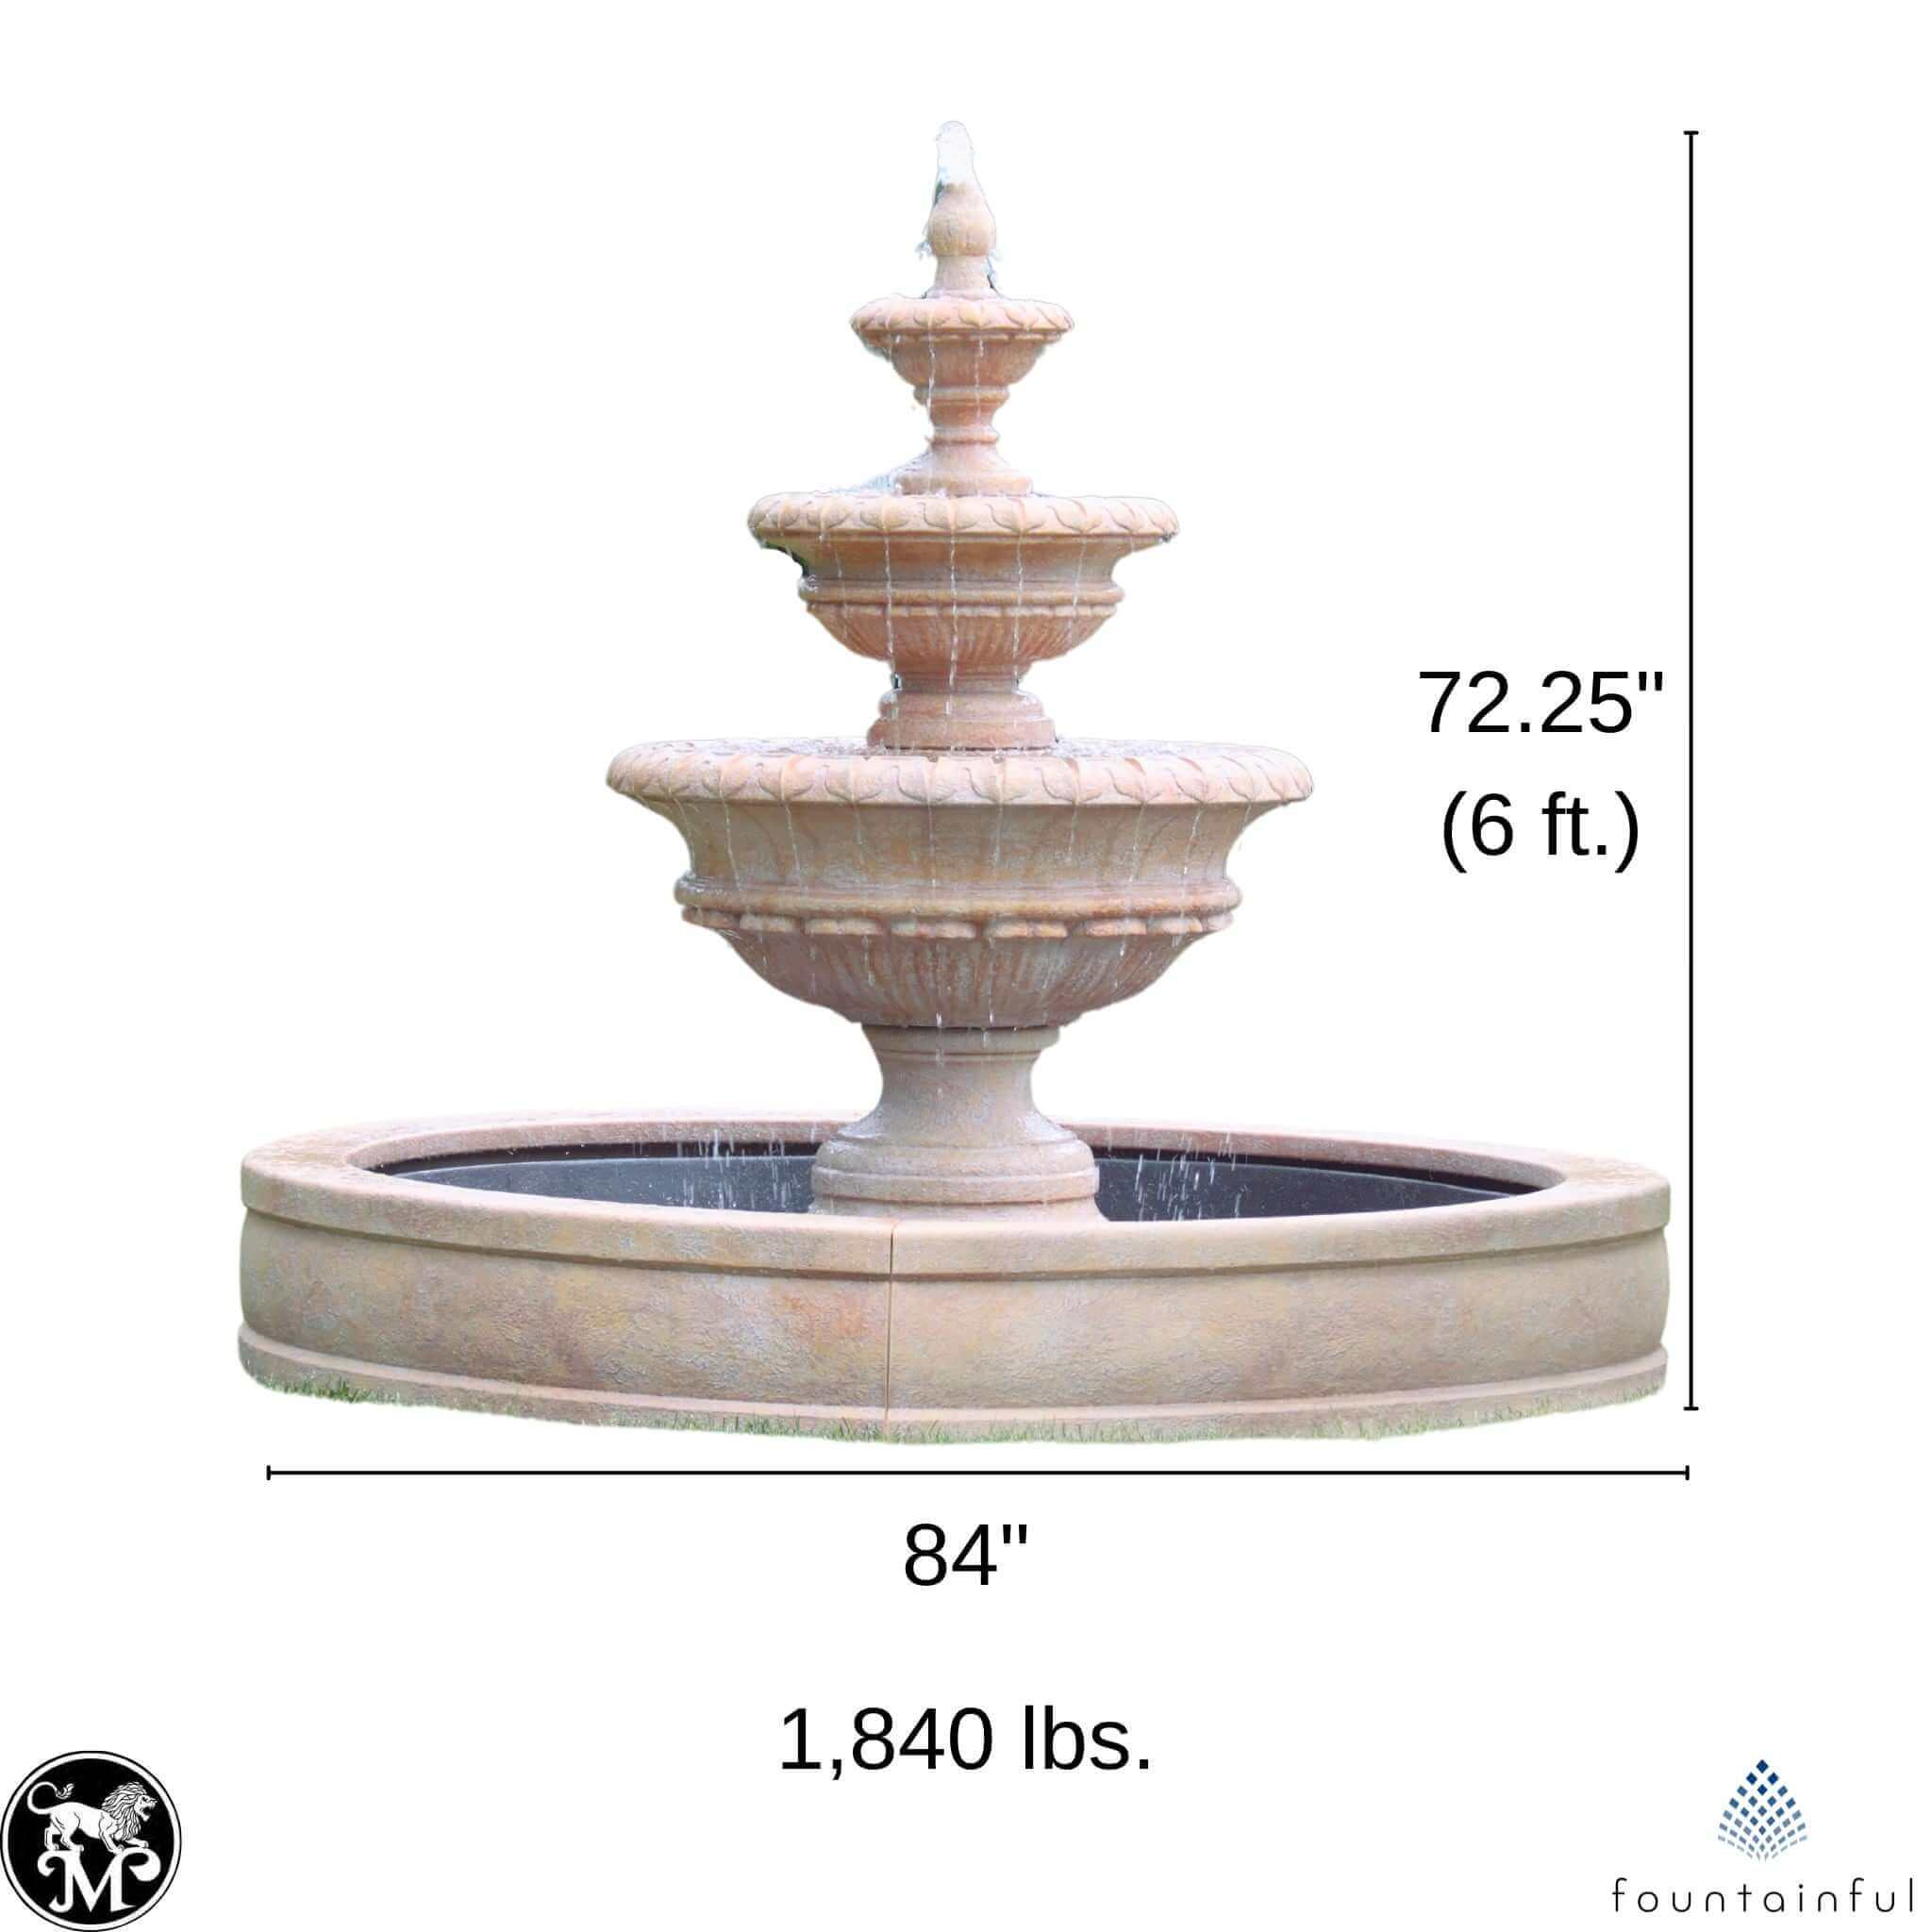 Chanticleer 3-Tier Concrete Fountain w/Pool - Massarellis #3722